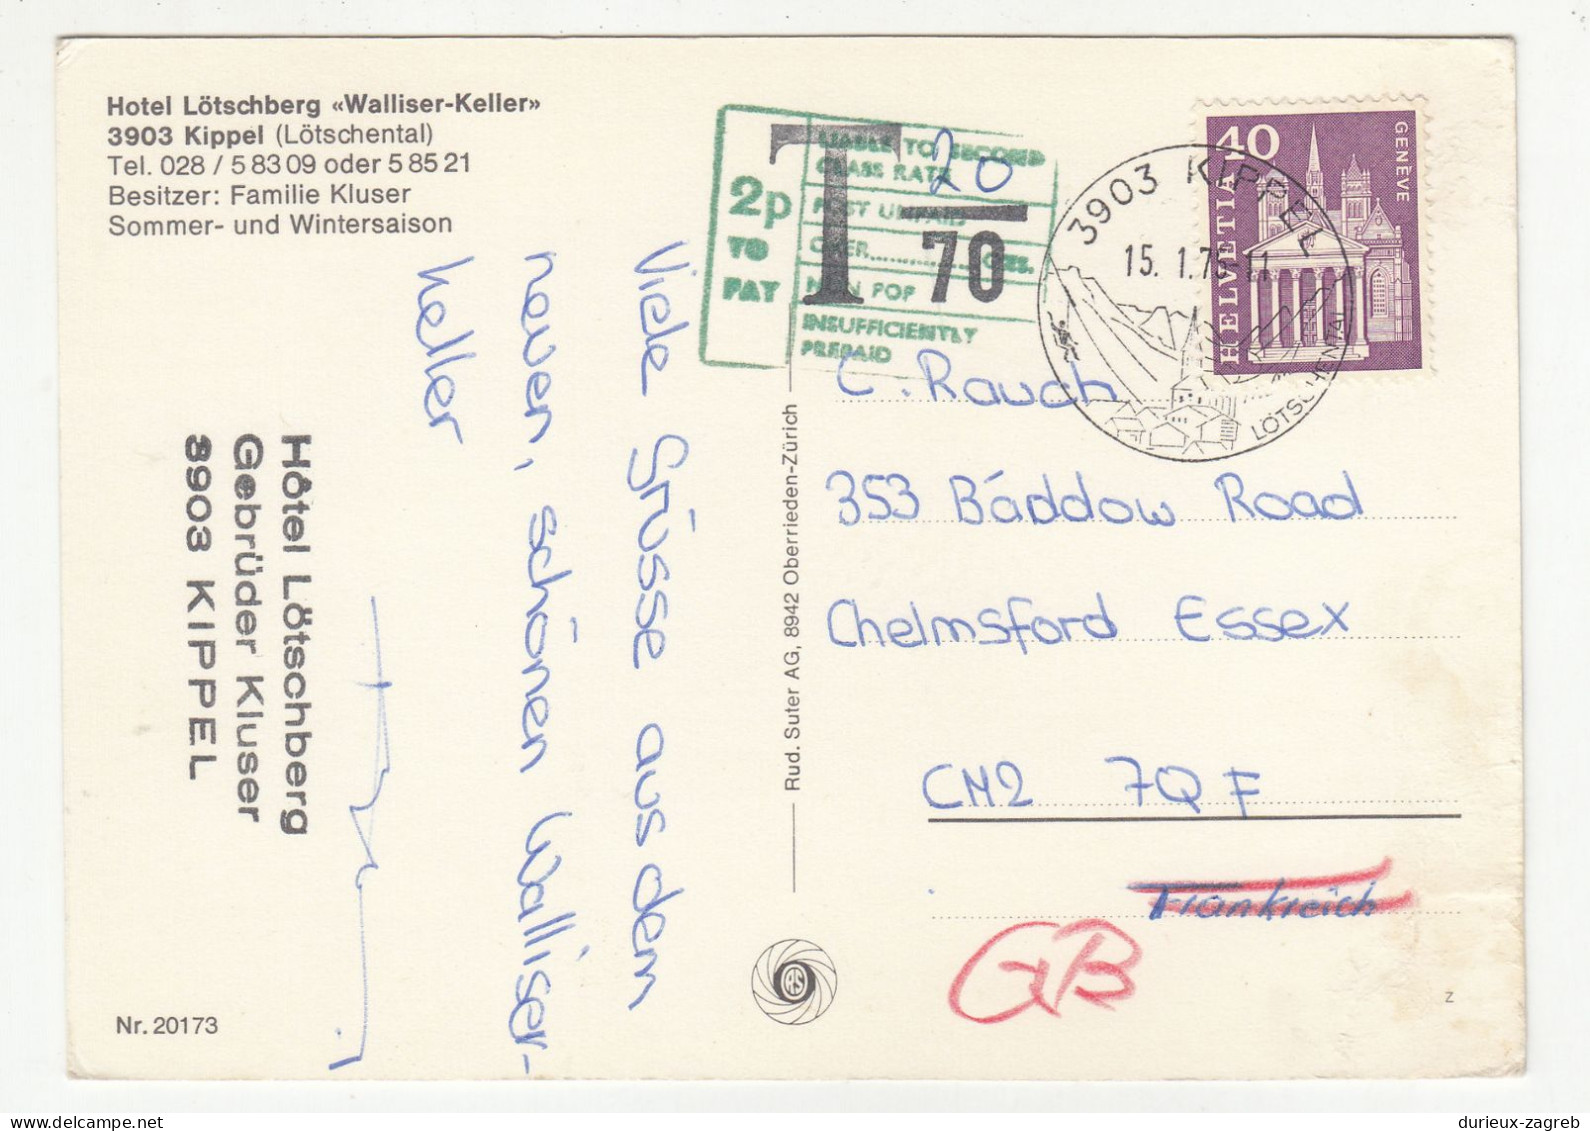 Switzerland Hotel Lötschberg "Walliser-Keller" Postcard Posted 1975 - Taxed Postage Due B240510 - Postage Due